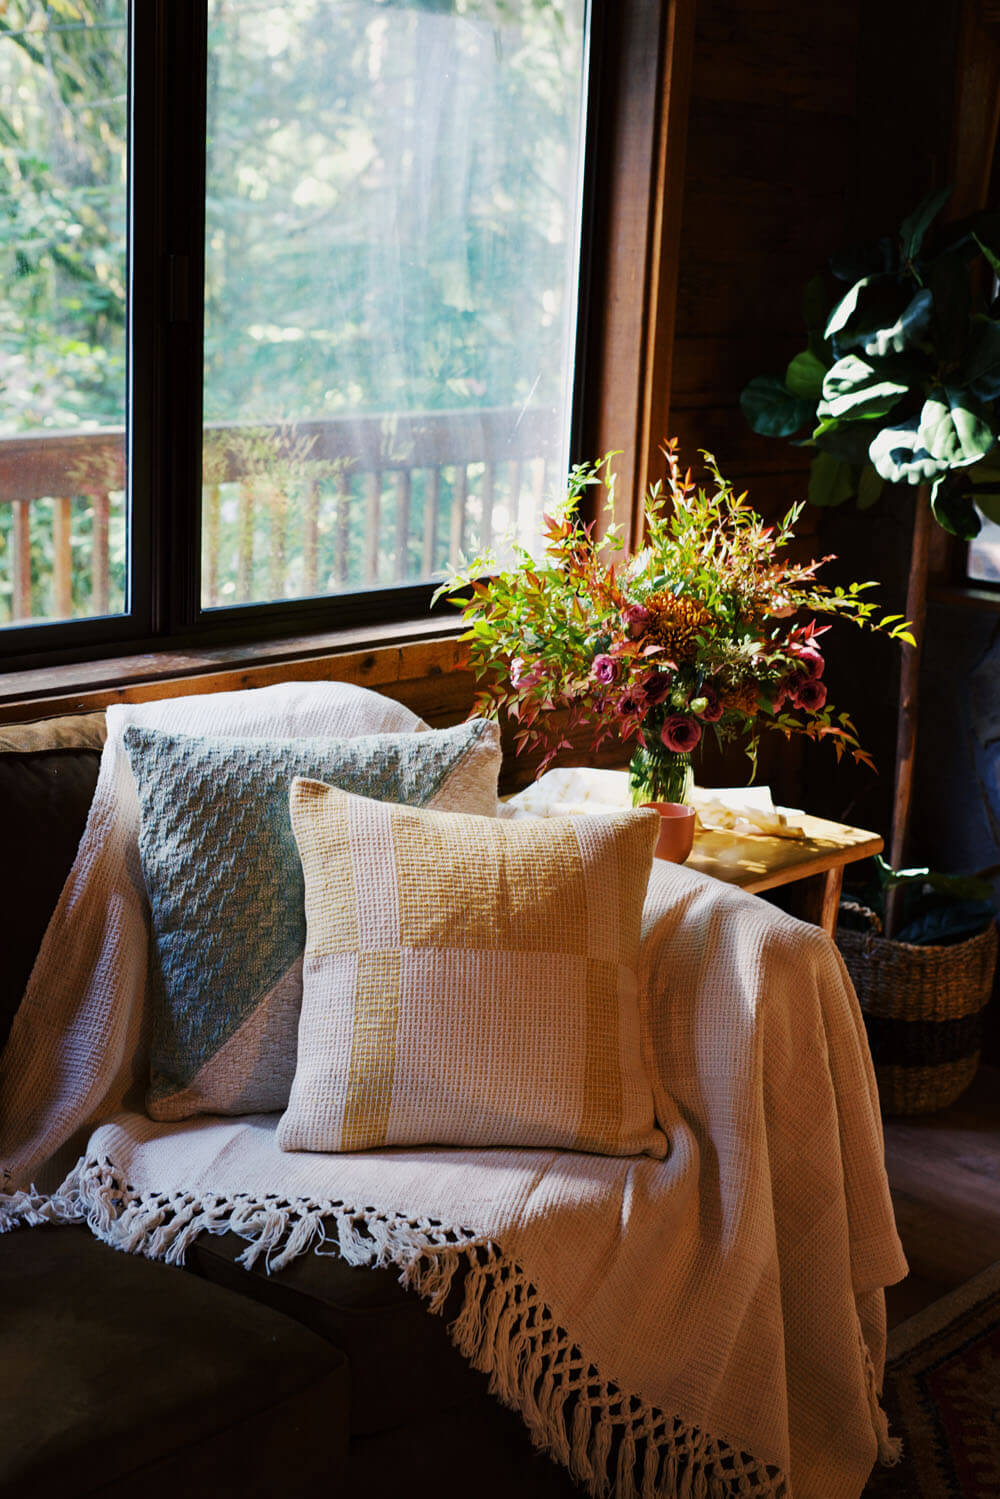 zuahaza pillows with cabin